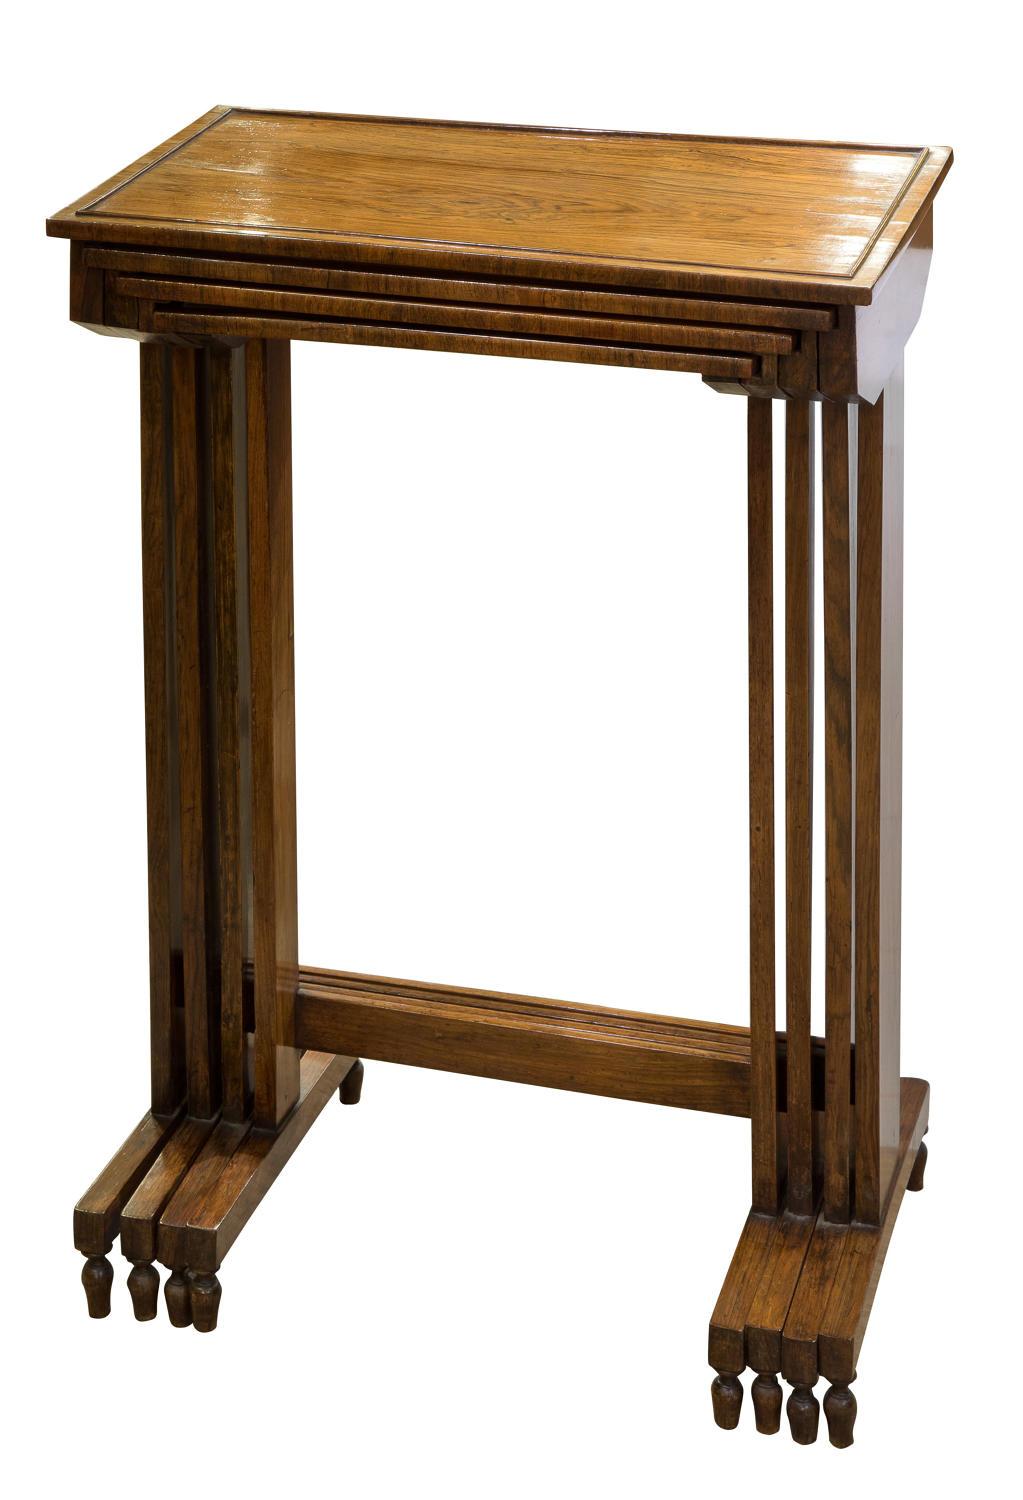 Regency rosewood set of quartetto tables of simple but elegant design,

circa 1820.